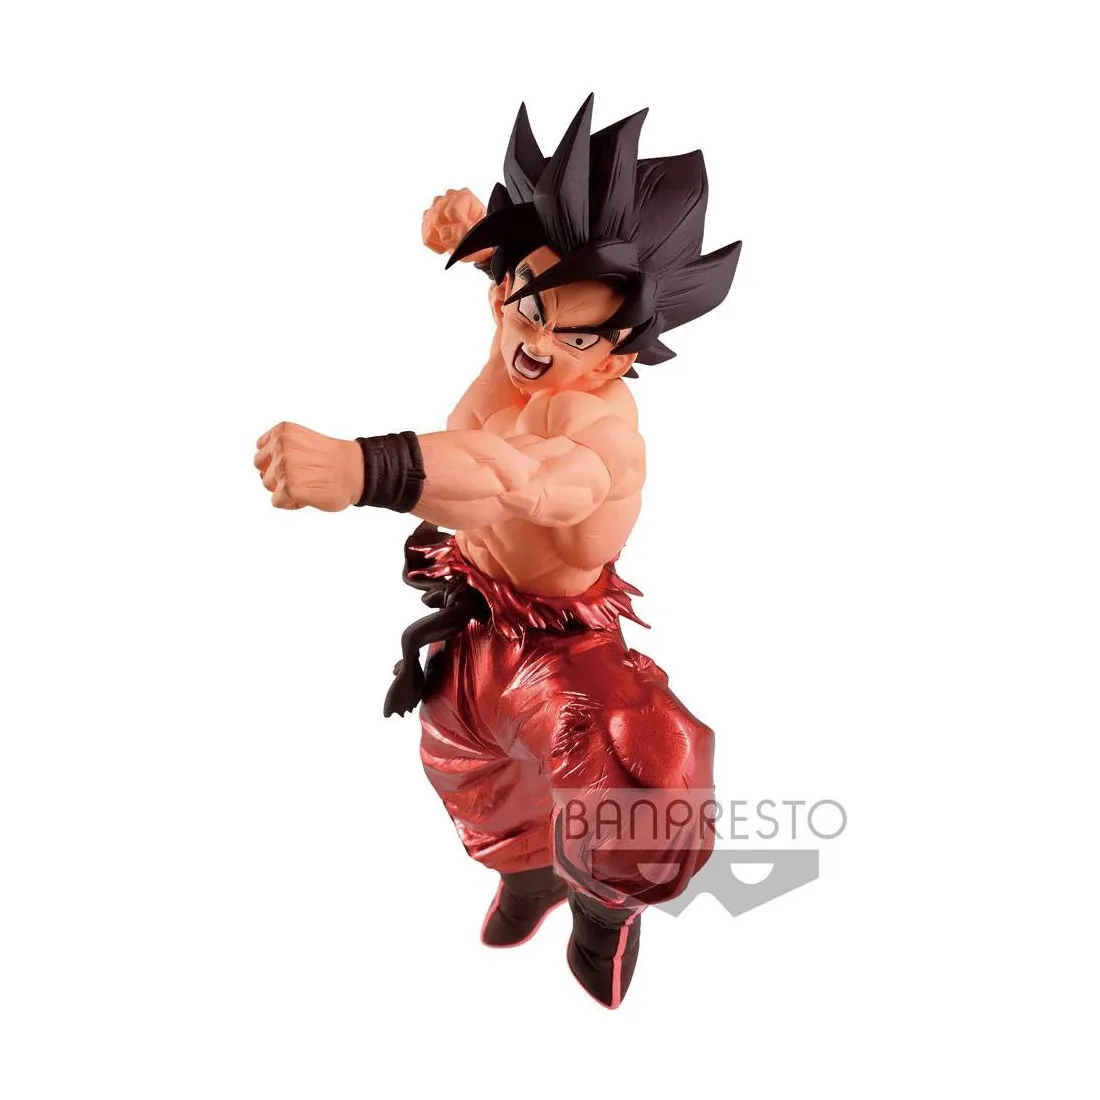 Blood of Saiyans Special X Son Goku Kaioken Figure